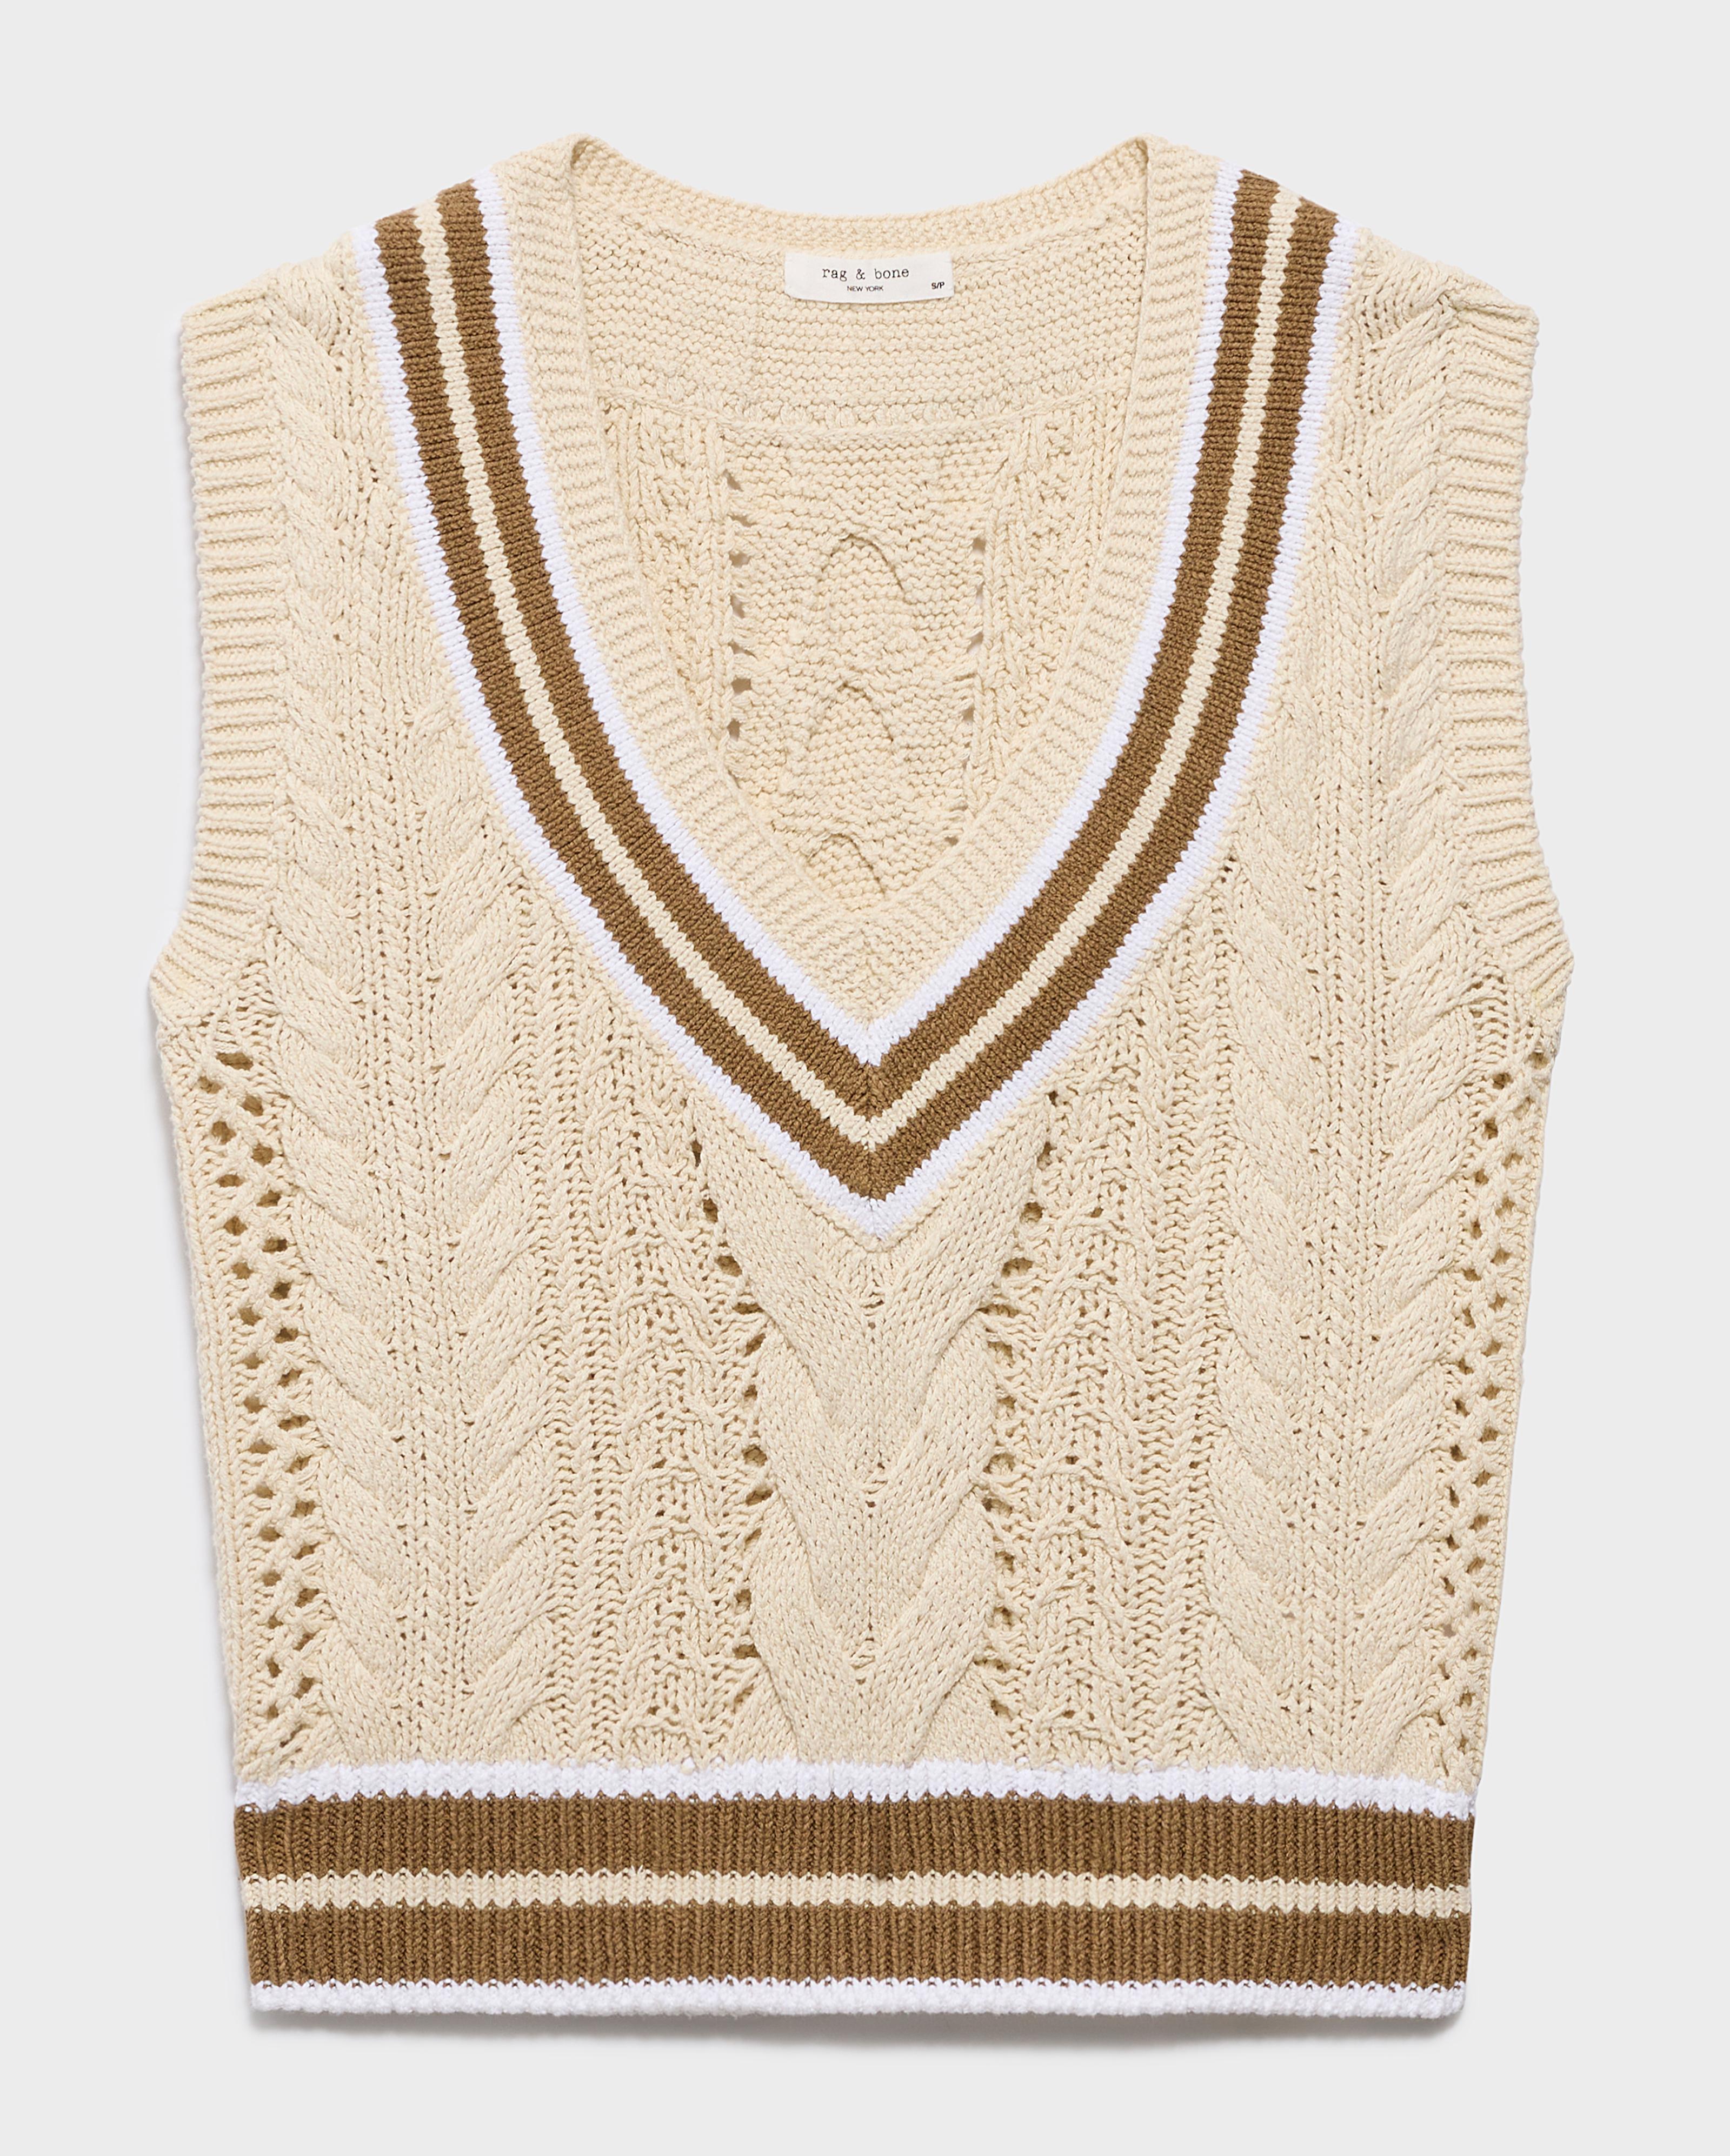 Brandy Cotton Sweater Vest